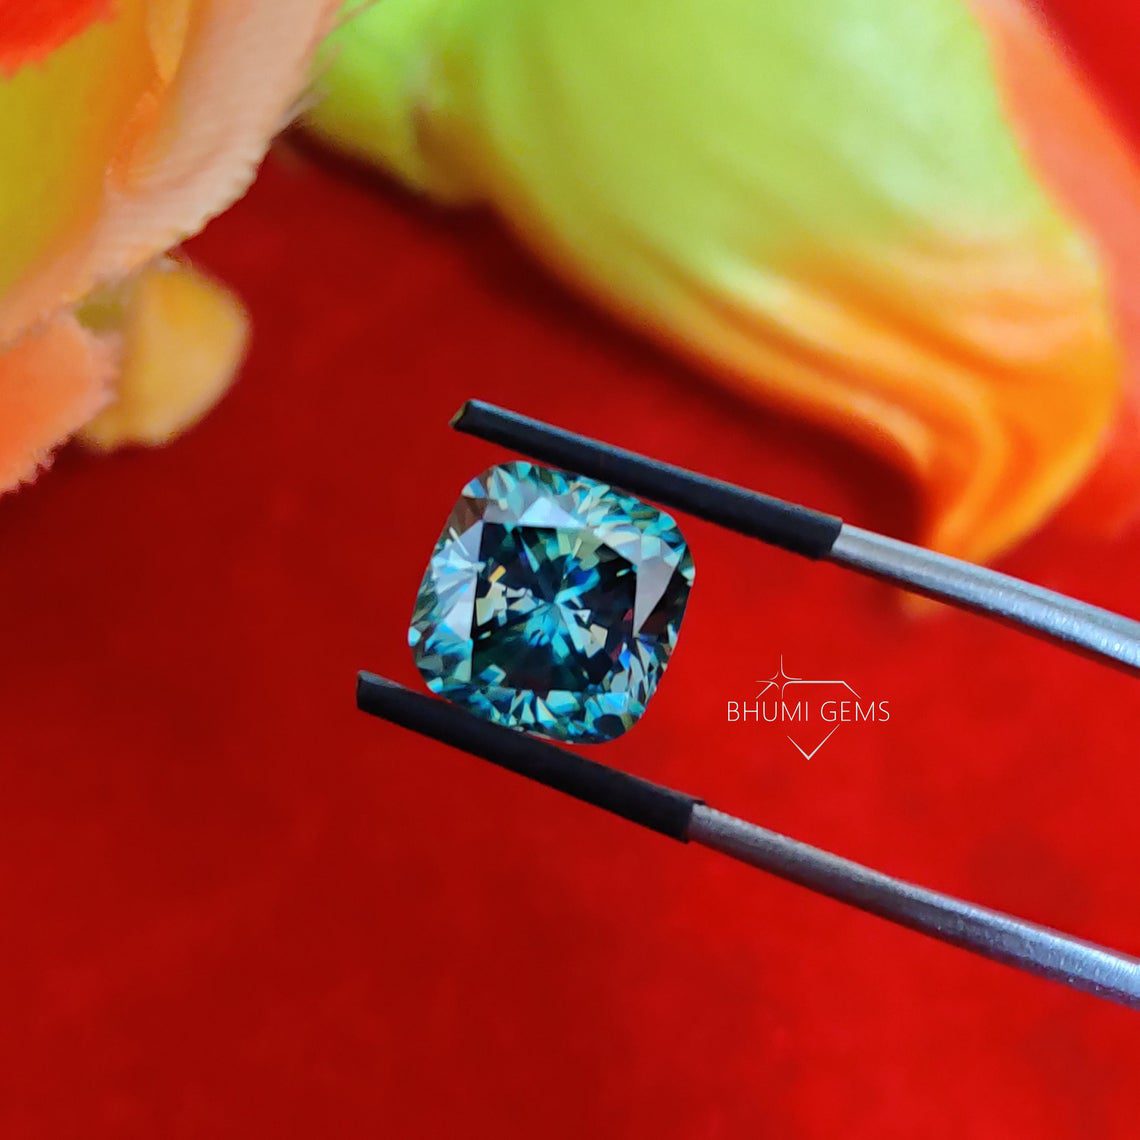 1CT-10CT Dark Blue Cushion Cut VVS1 Moissanite Loose Diamond | Loose Moissanite | Gemstone | For Jewelry Making Ring, Earring, Pendant